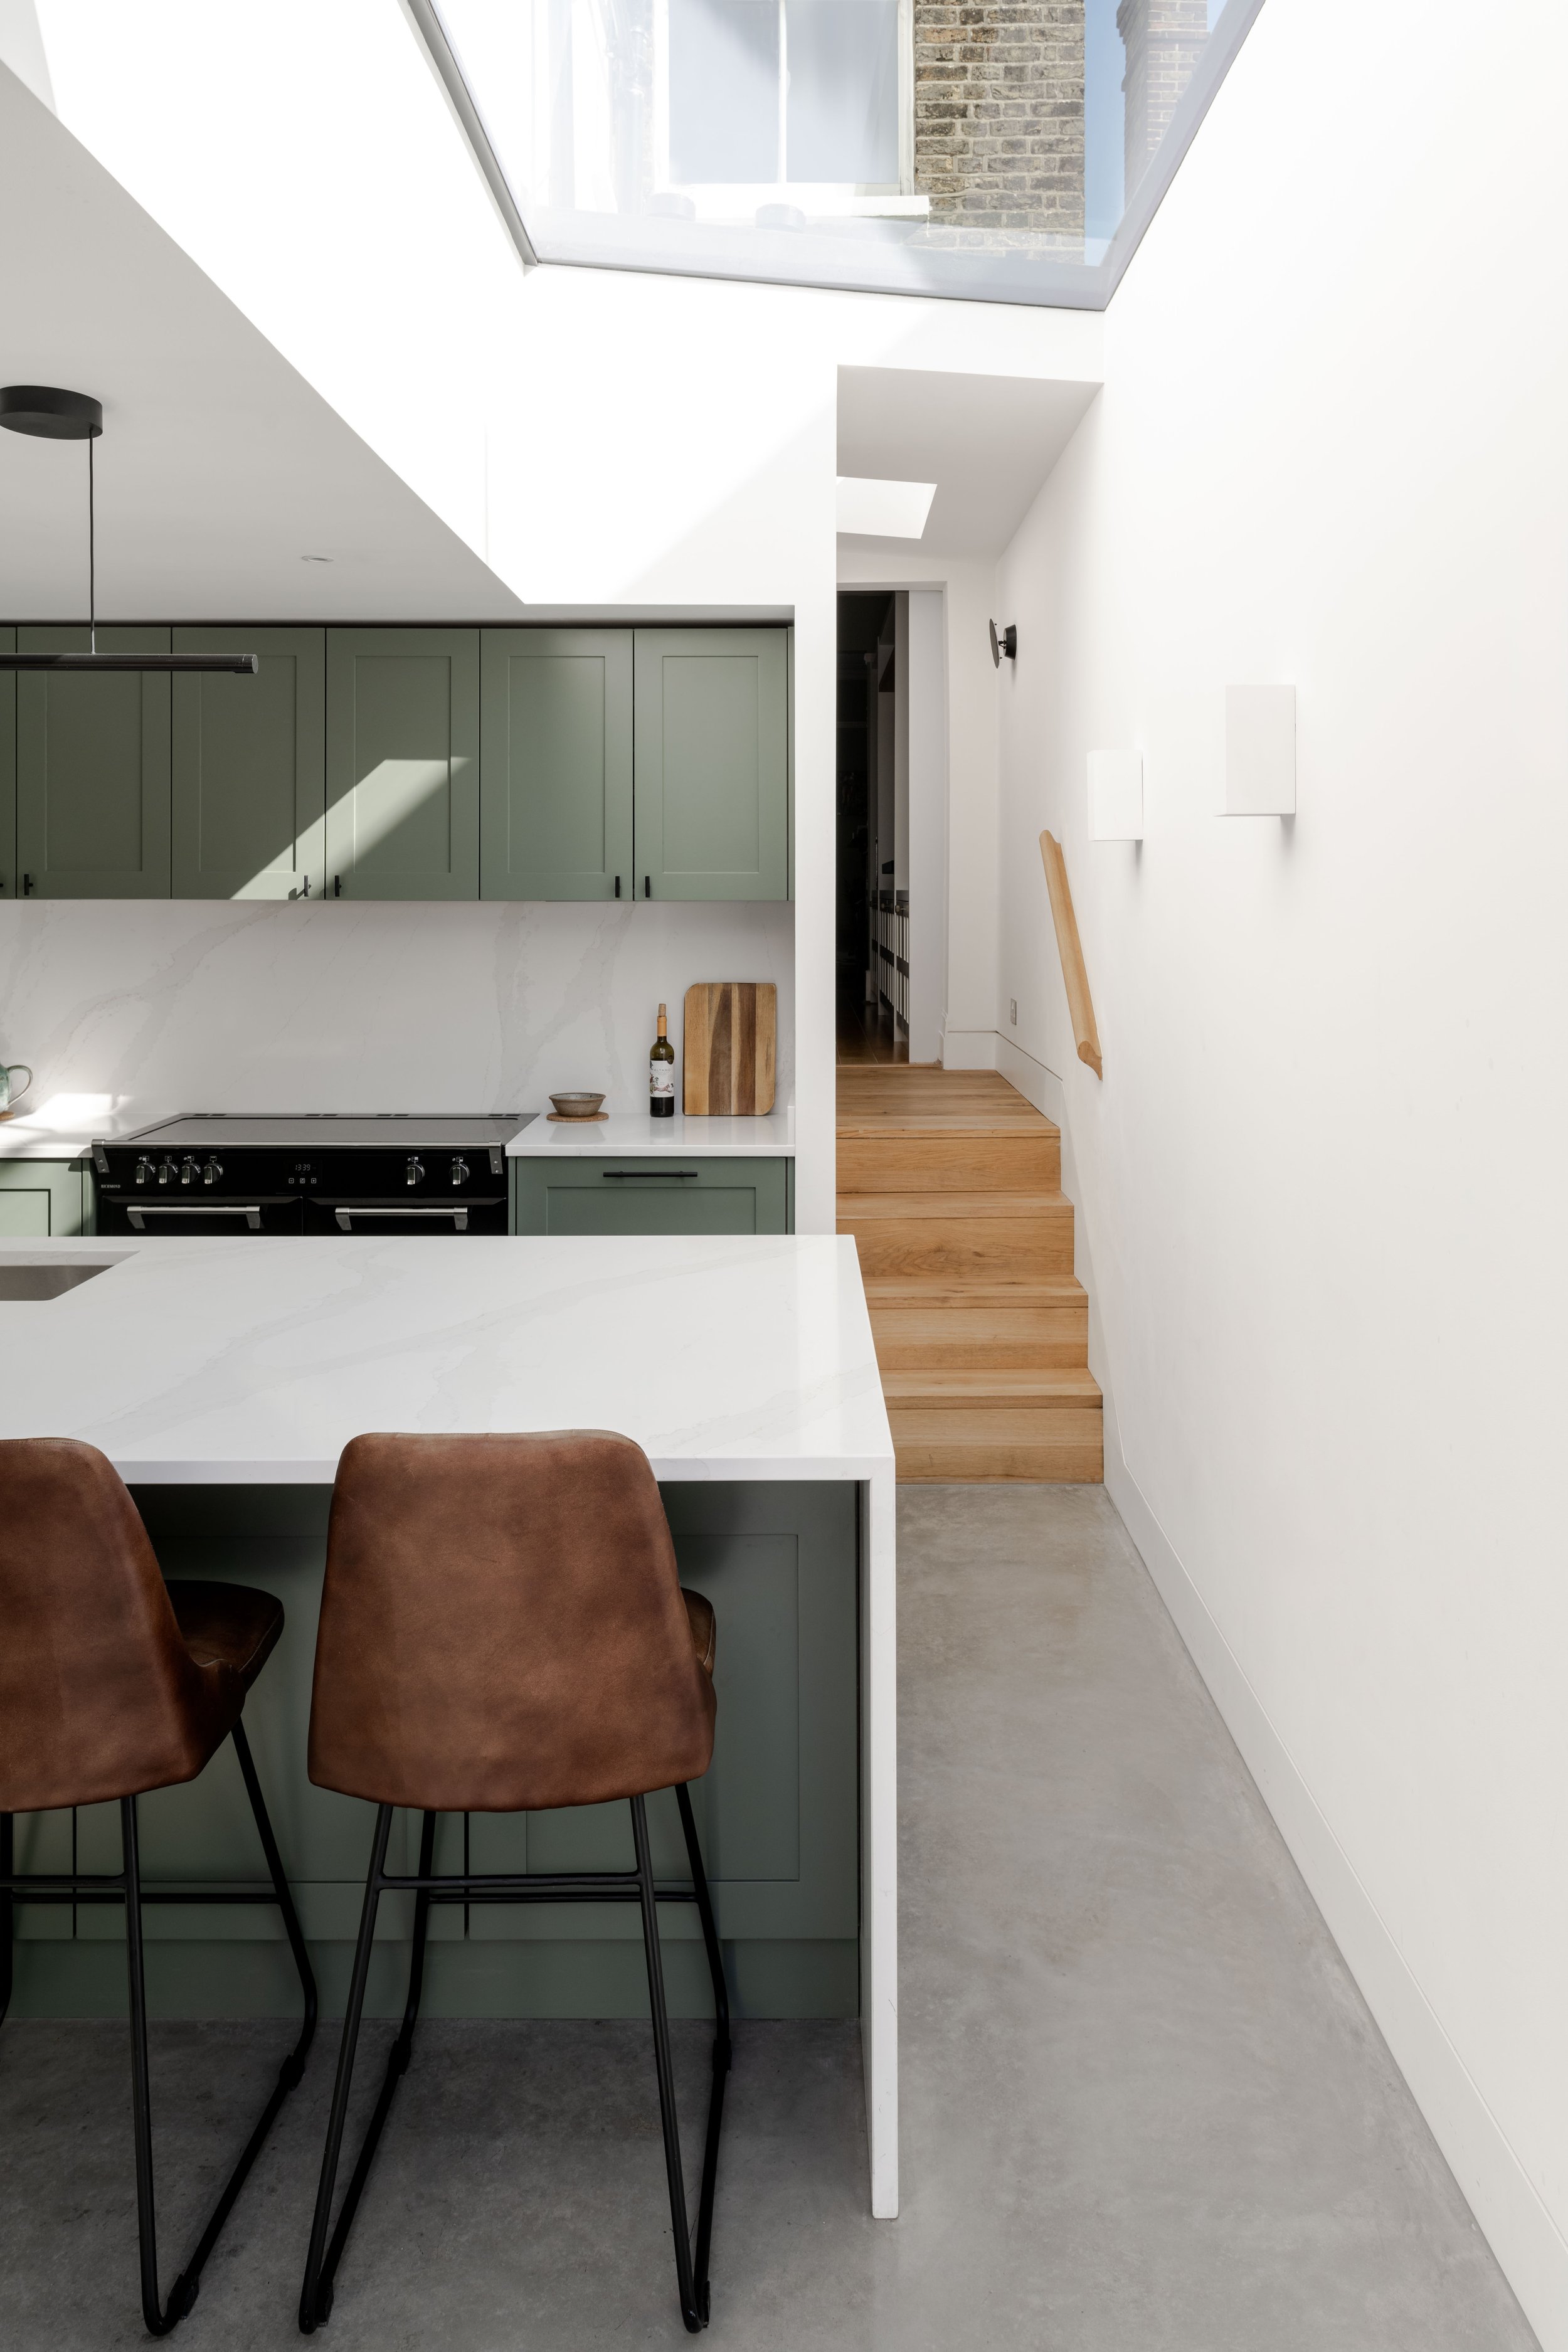 17-dulwich-house-victorian-semi-kitchen-extension-interior-architecture-lambeth-london-uk-rider-stirland-architects.jpg